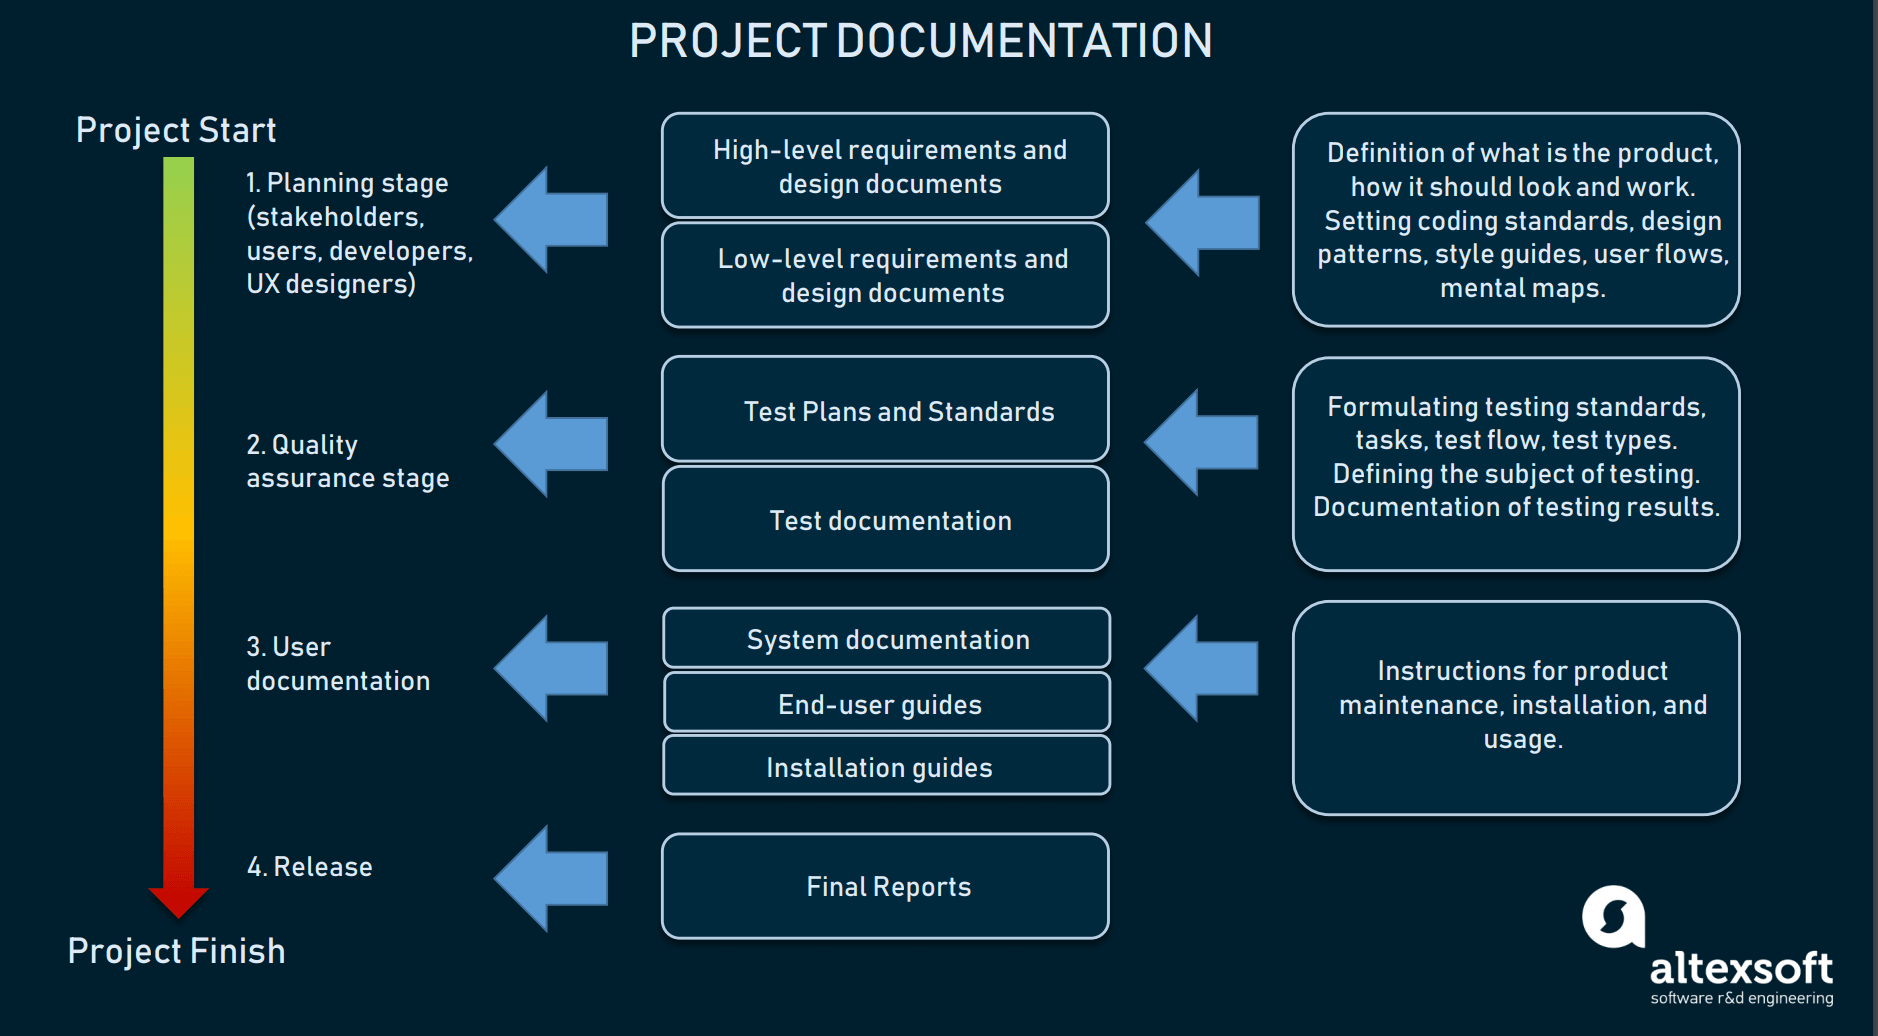 Writing help documentation software